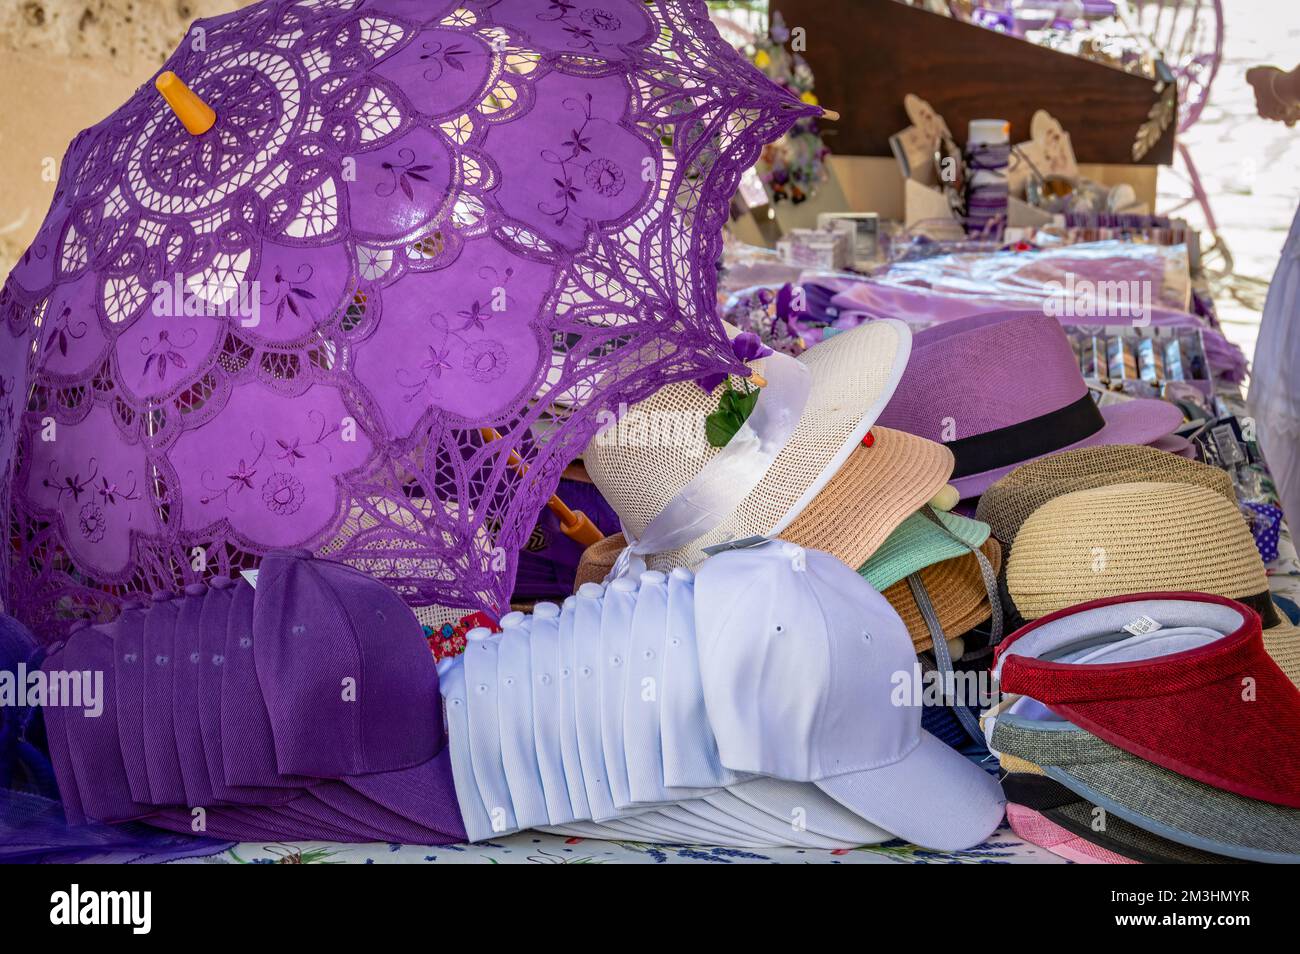 Embroidered violet umbrella and hats on Brhuega's street market. Lavender festival, Spain Stock Photo